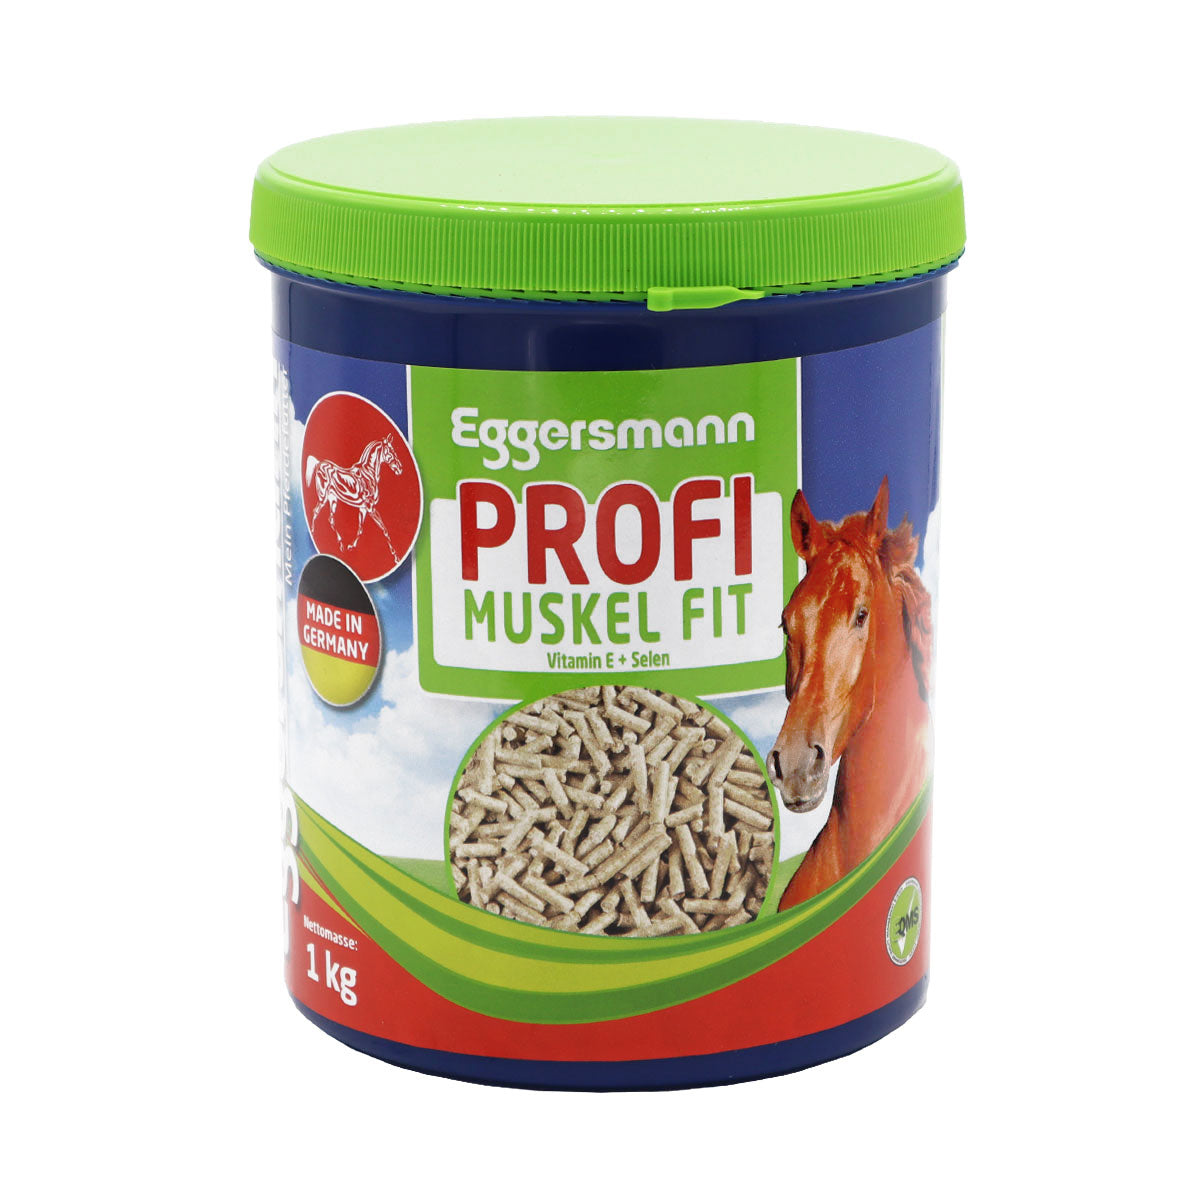 Eggersmann Profi Muskel Fit (Vitamin E + Selen)